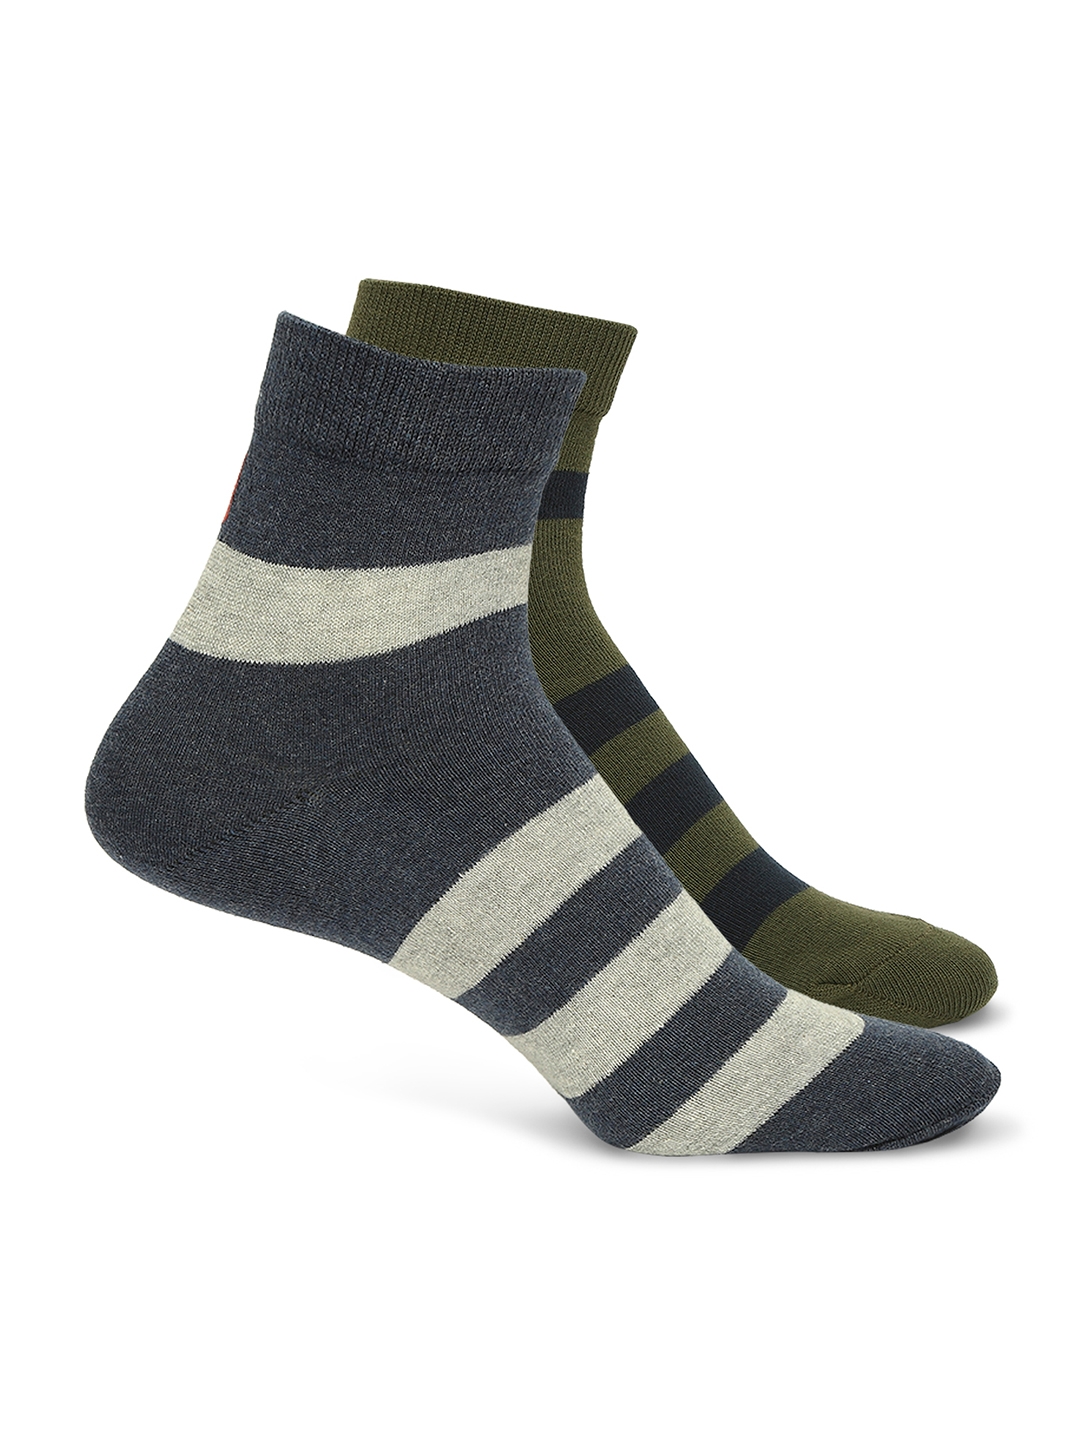 Underjeans by Spykar Premium Olive & Navy Melange Ankle Length Socks - Pack Of 2